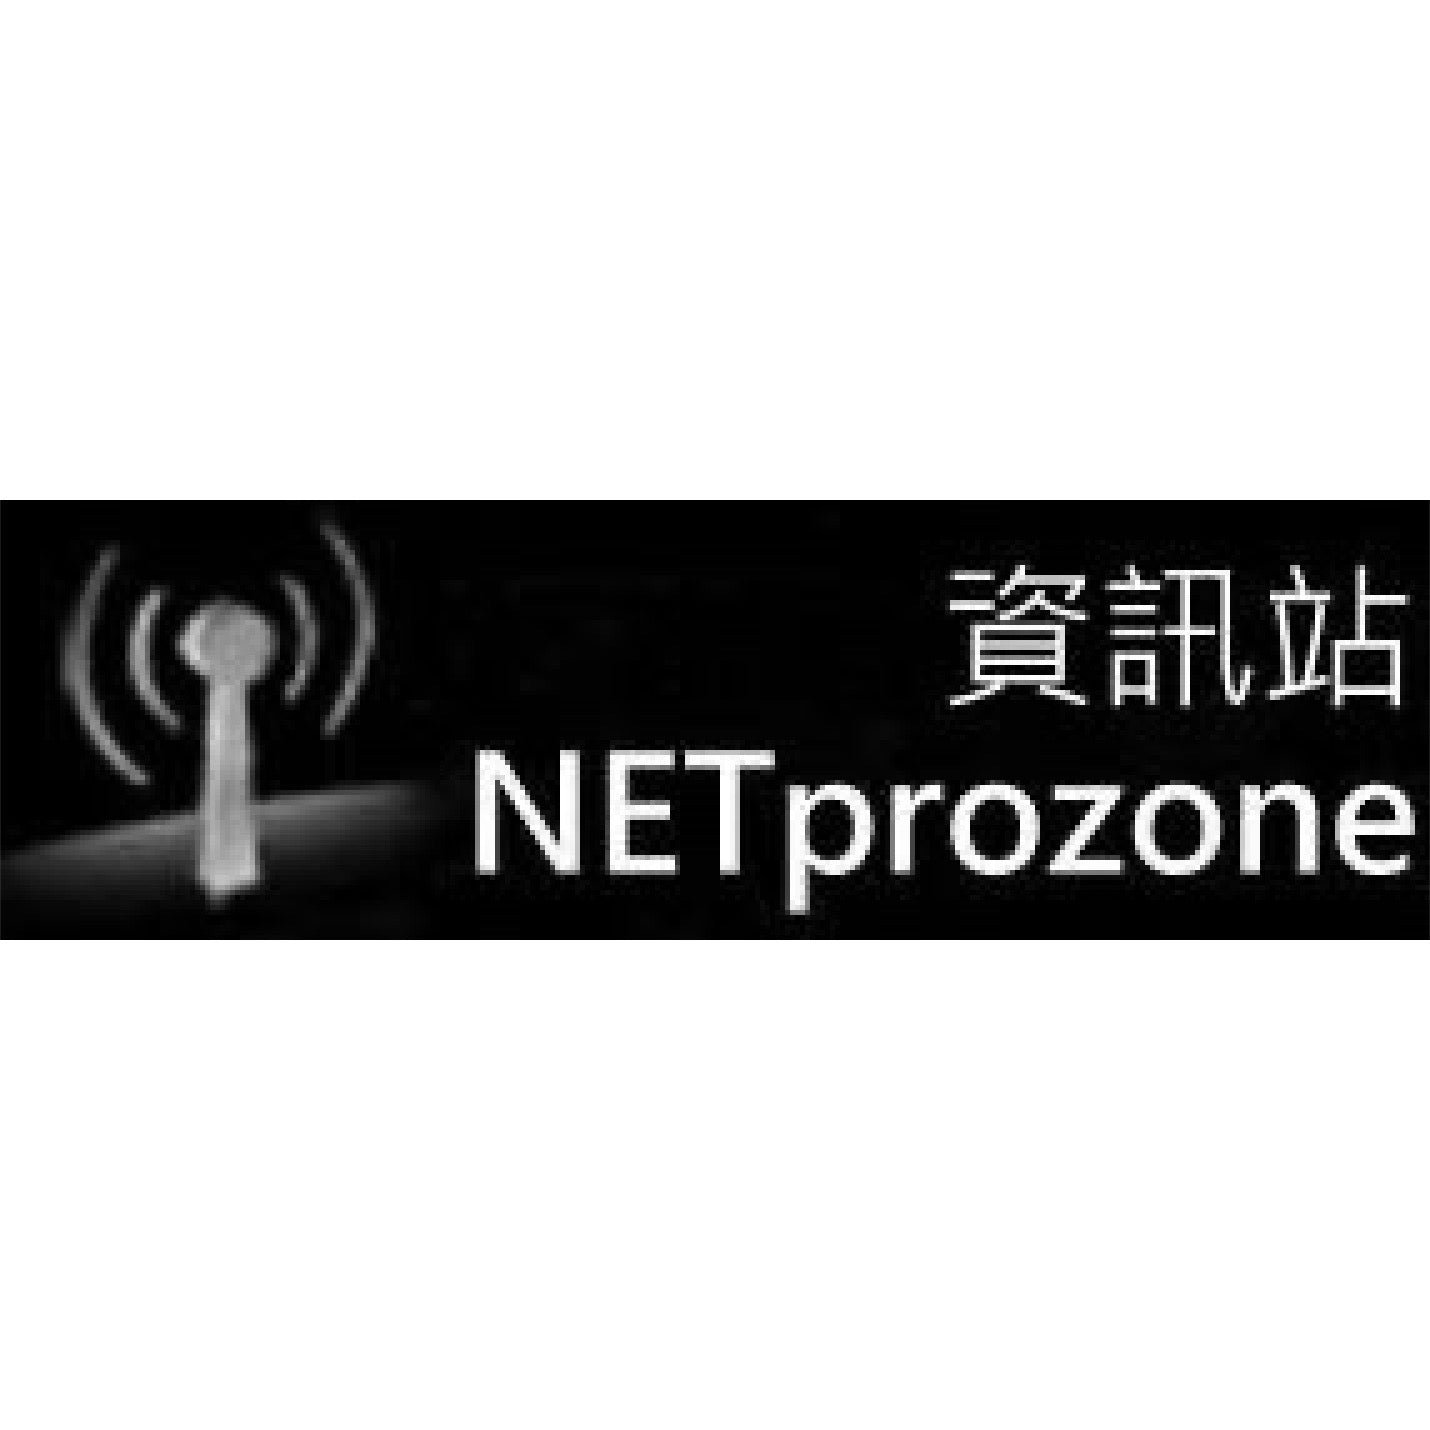 Net Prozone